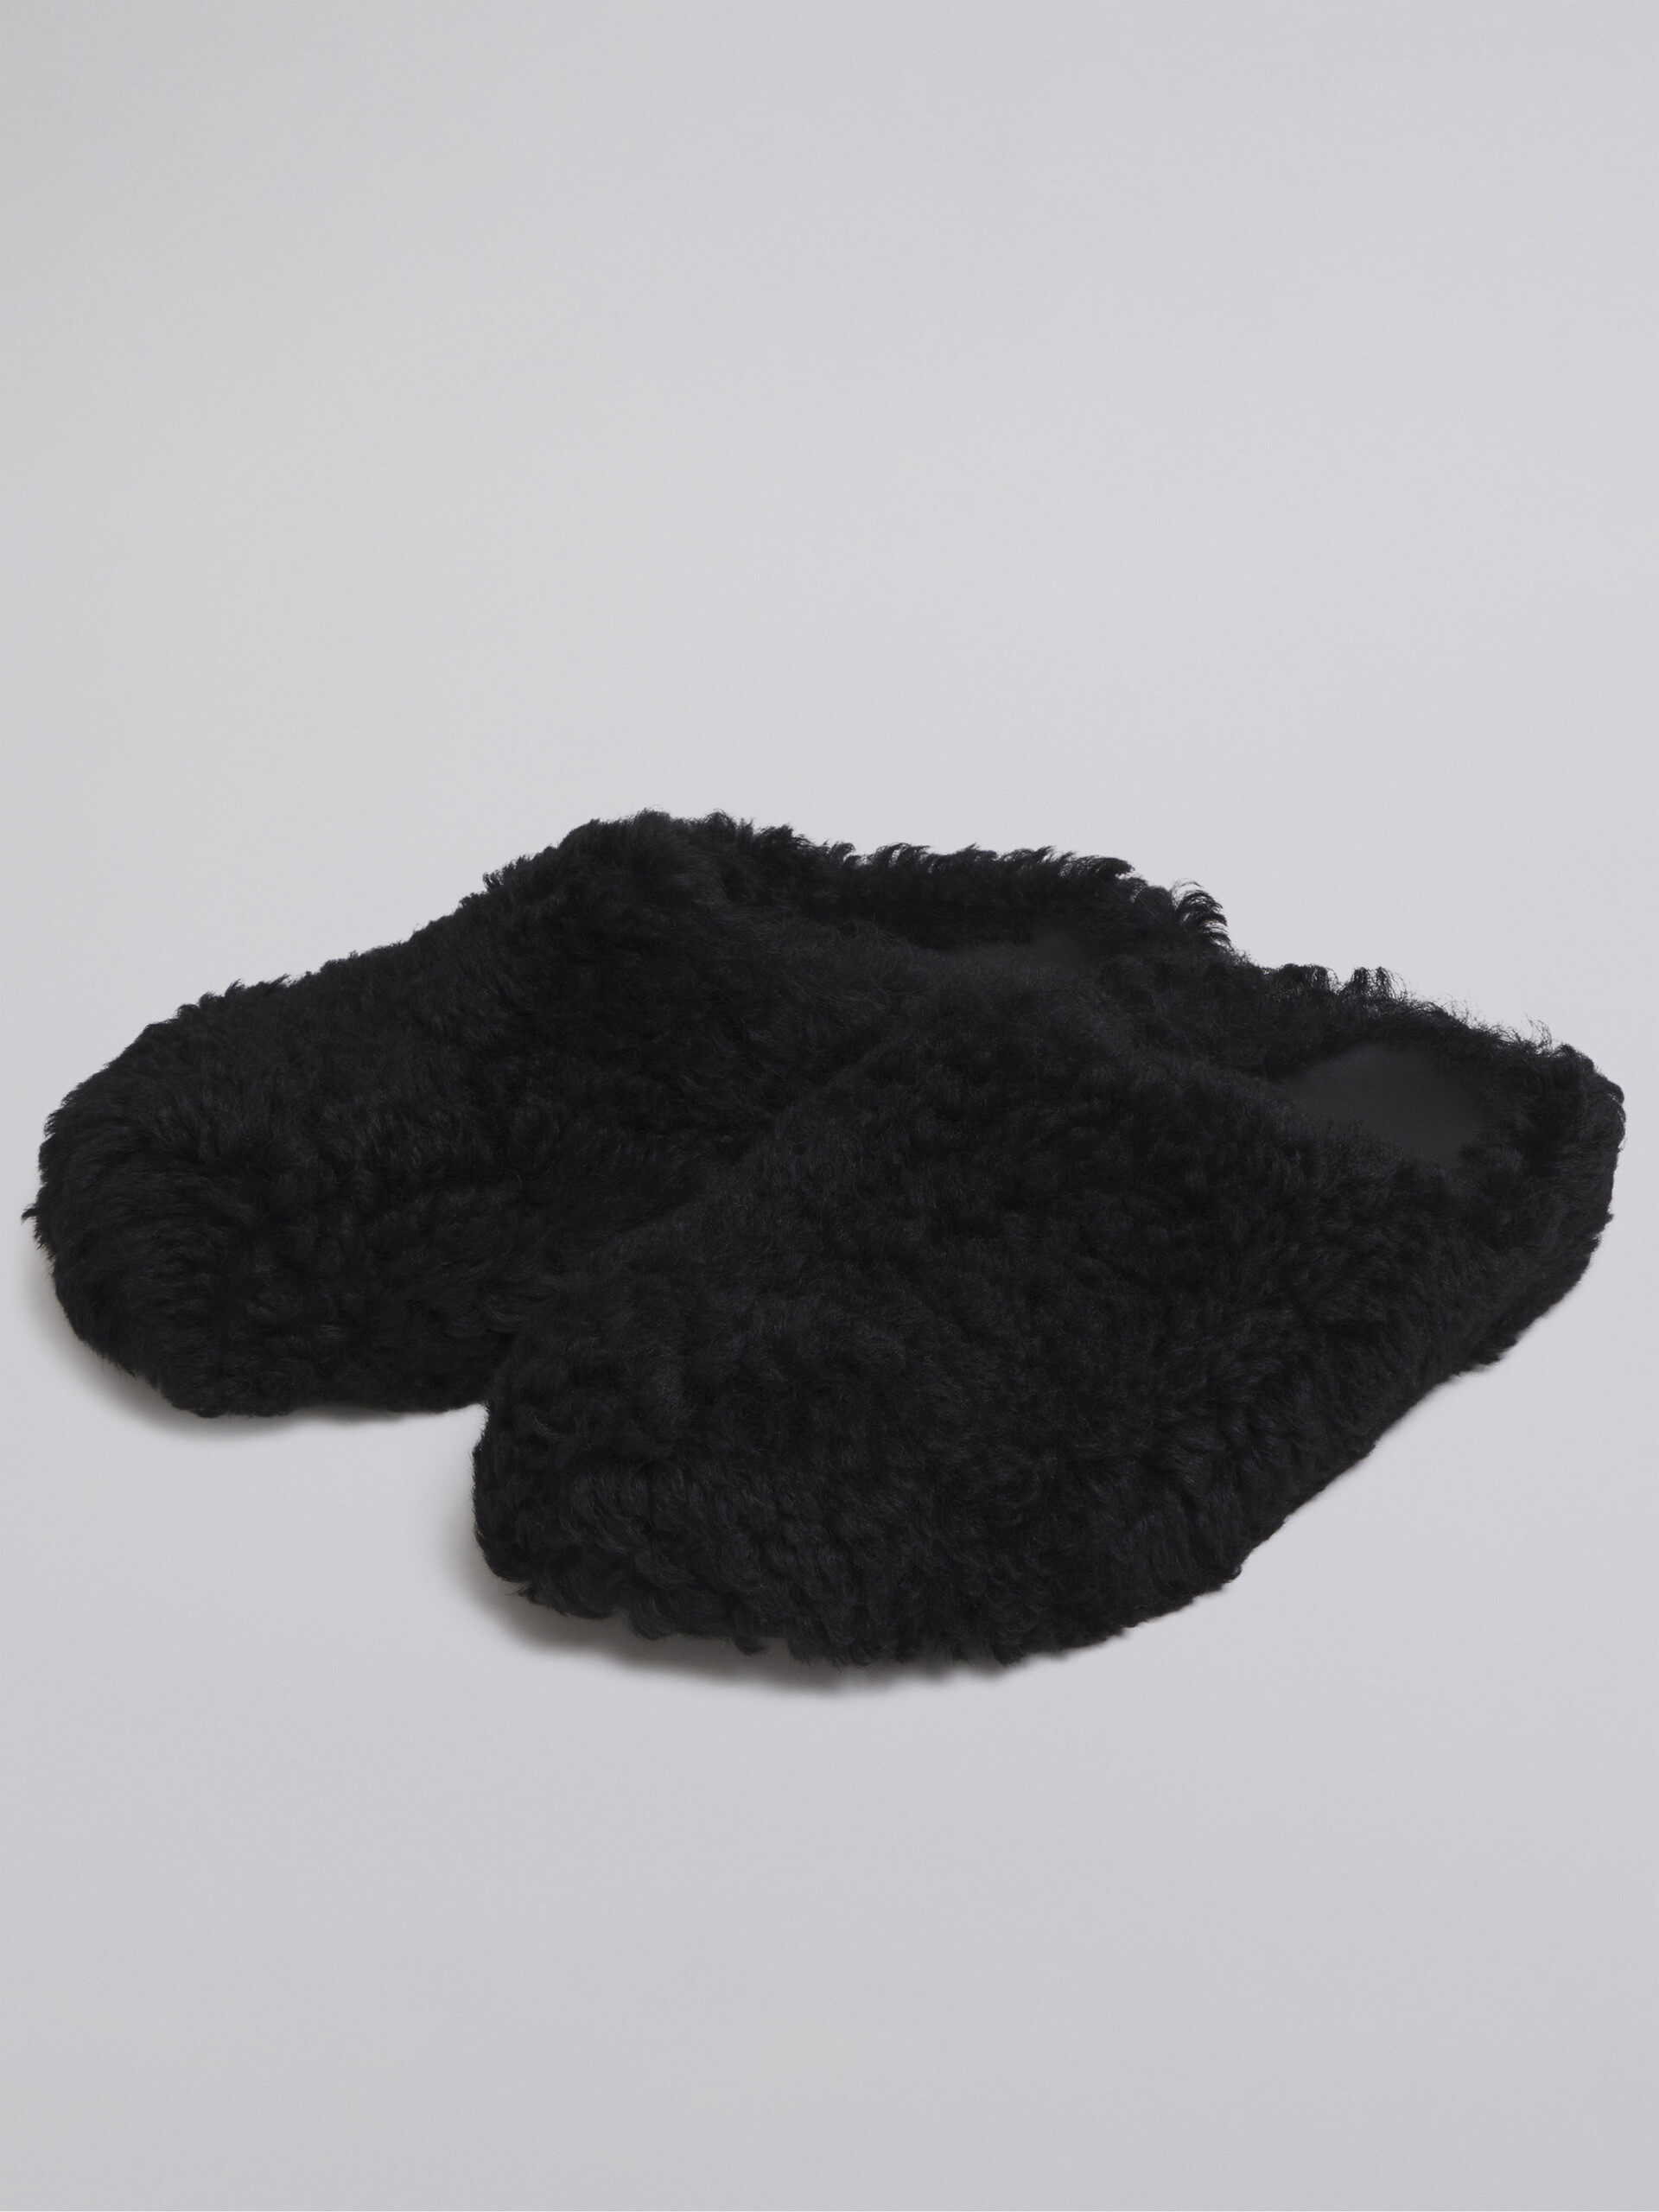 Pantolette aus schwarzem Shearling - Holzschuhe - Image 5